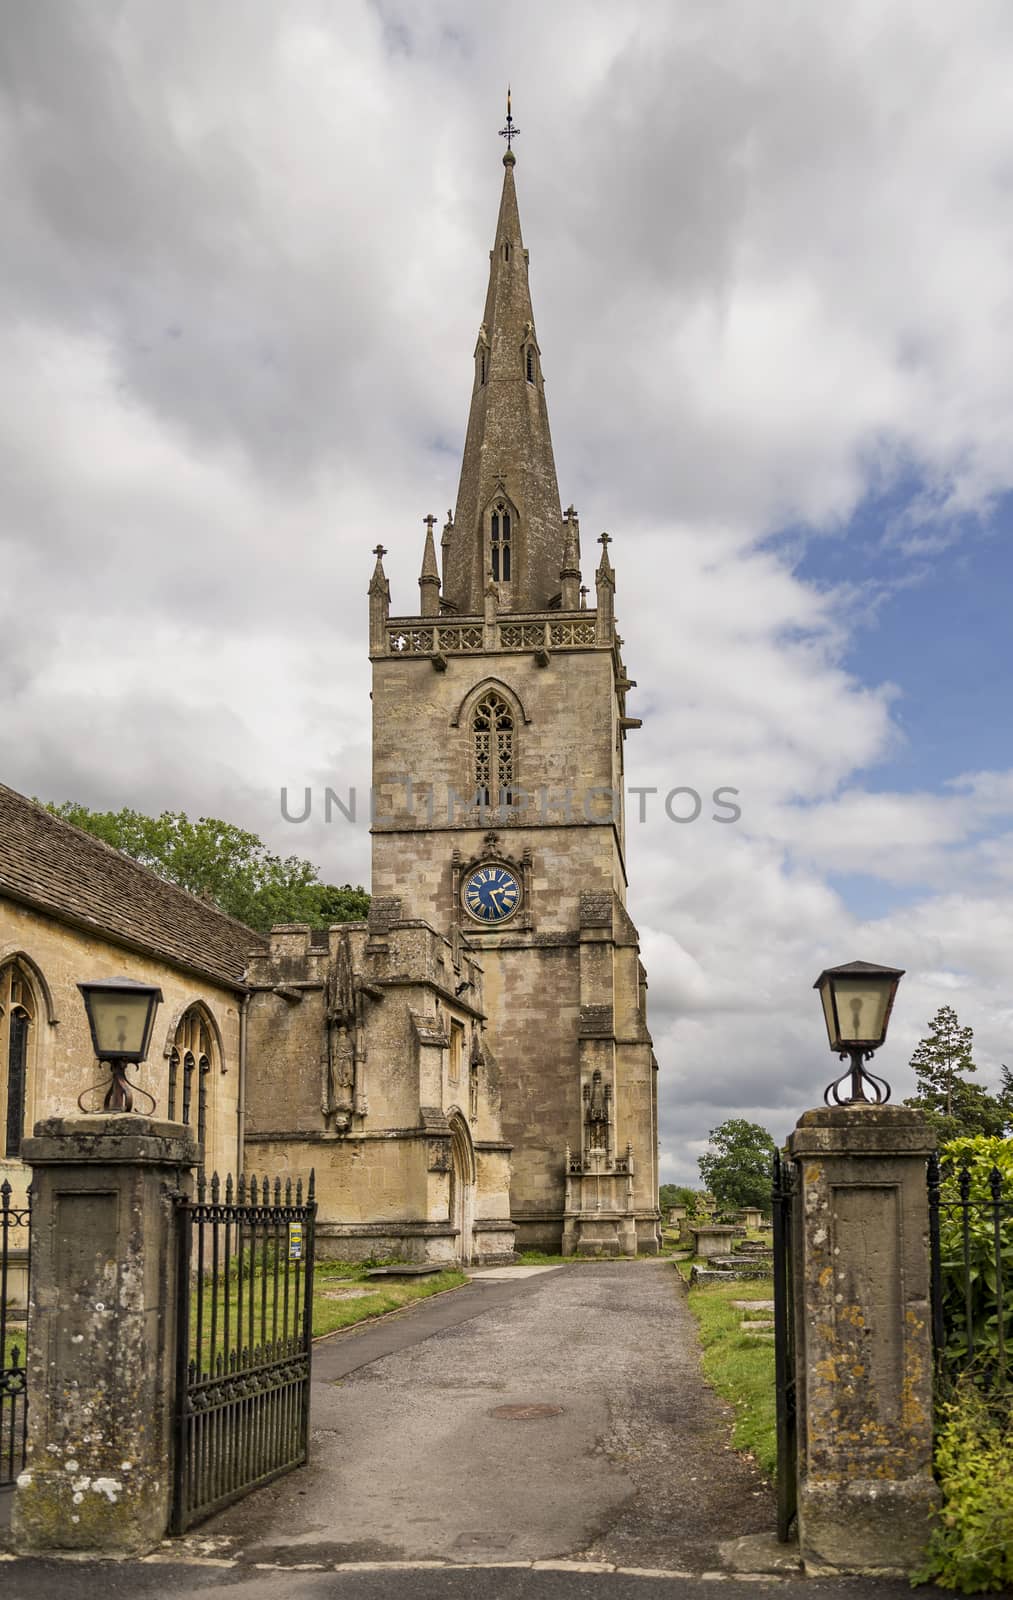 Corsham parish church in the market town of Corsham, Cotswolds, UK